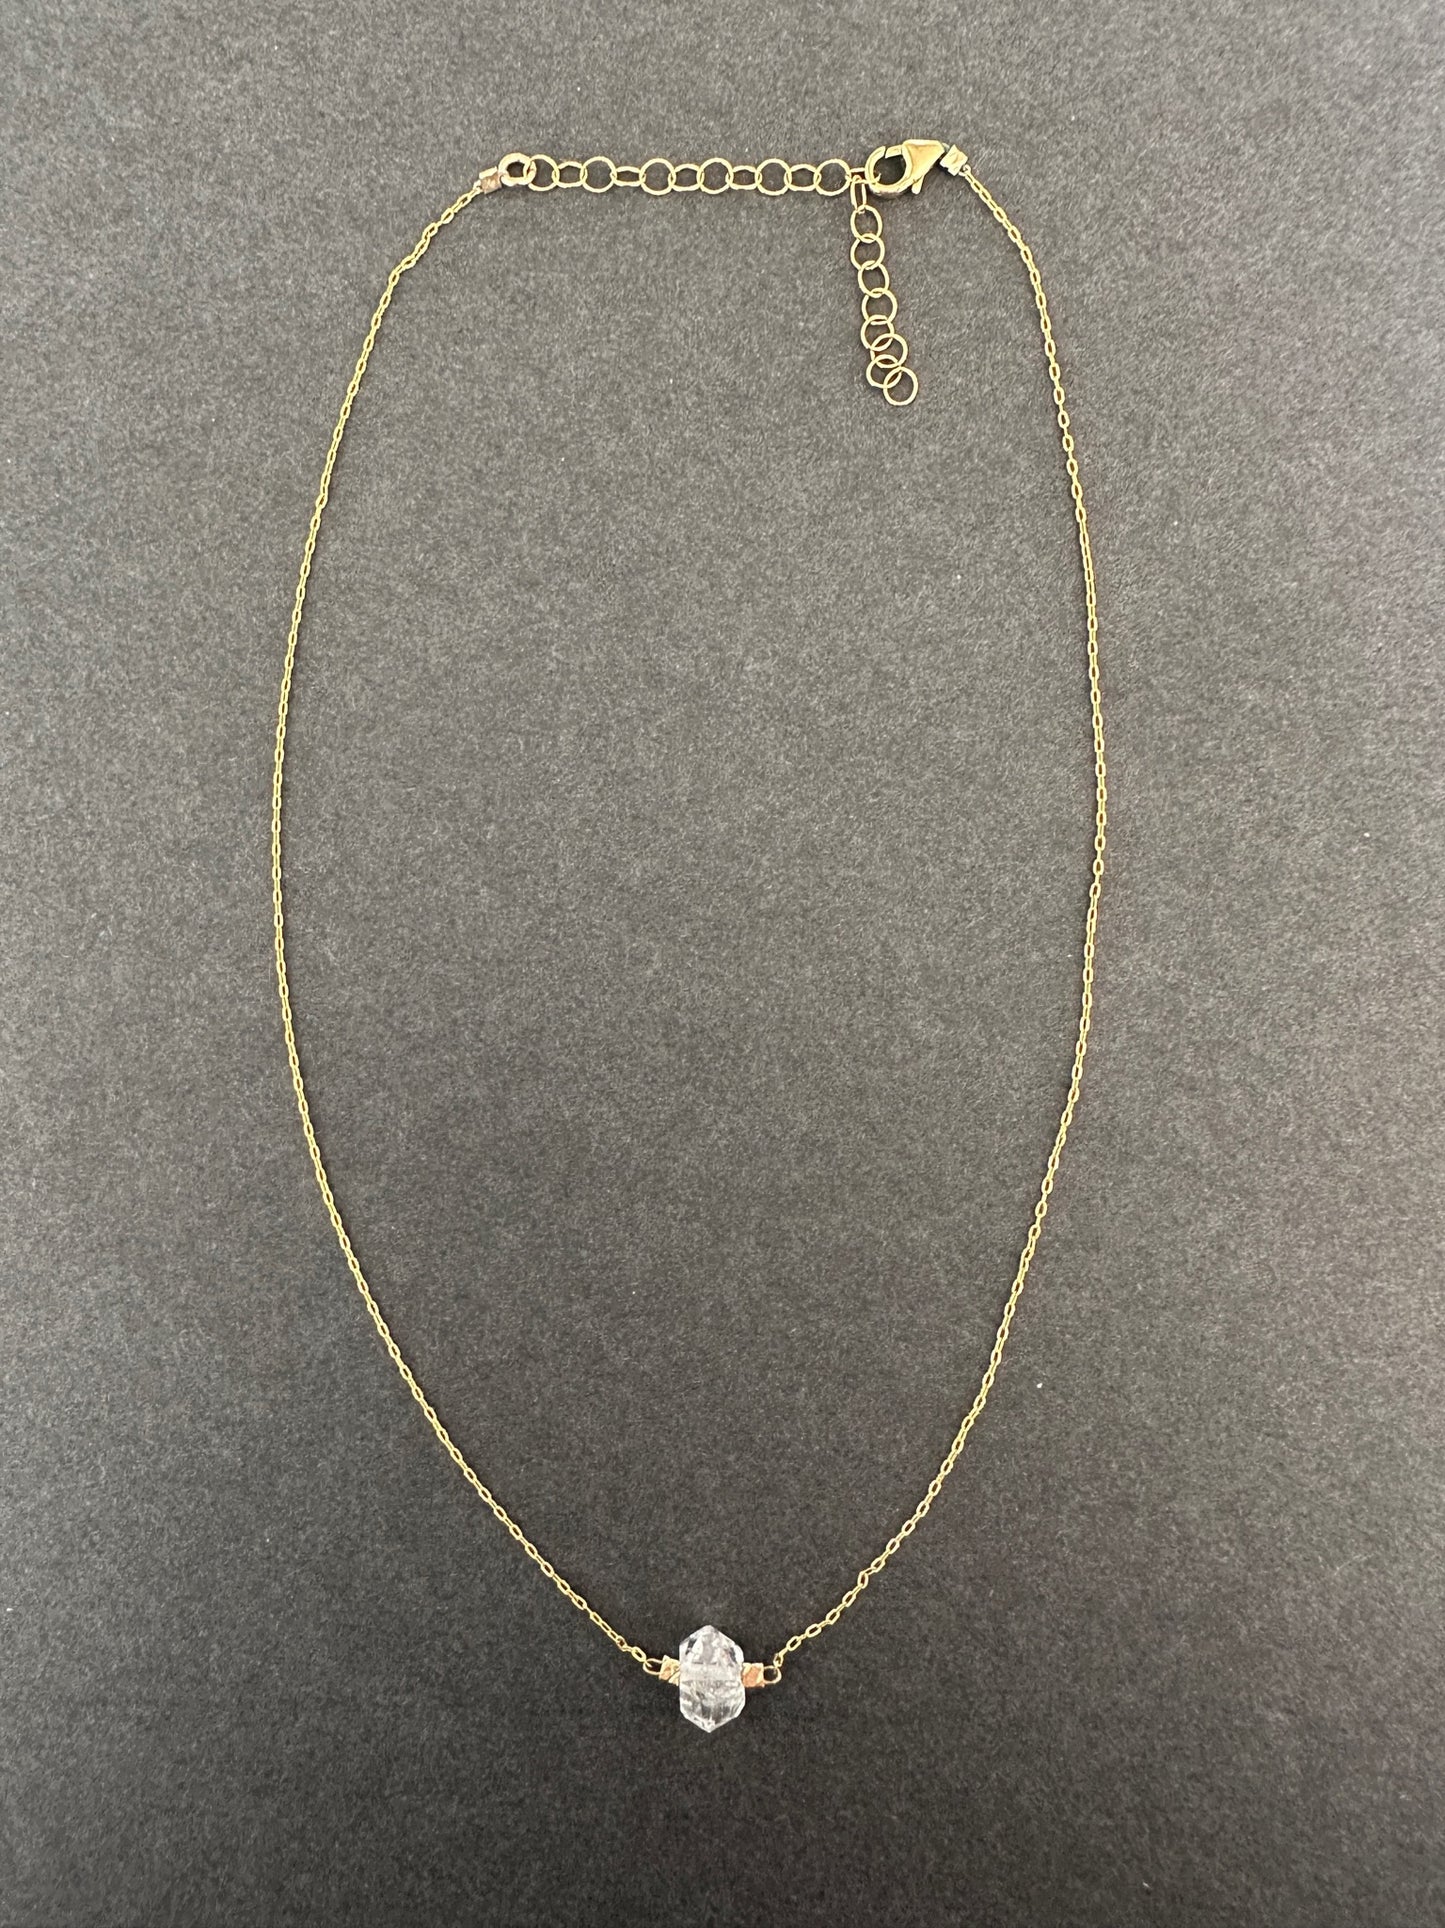 023.  “I AM” Herkimer Diamond Necklace